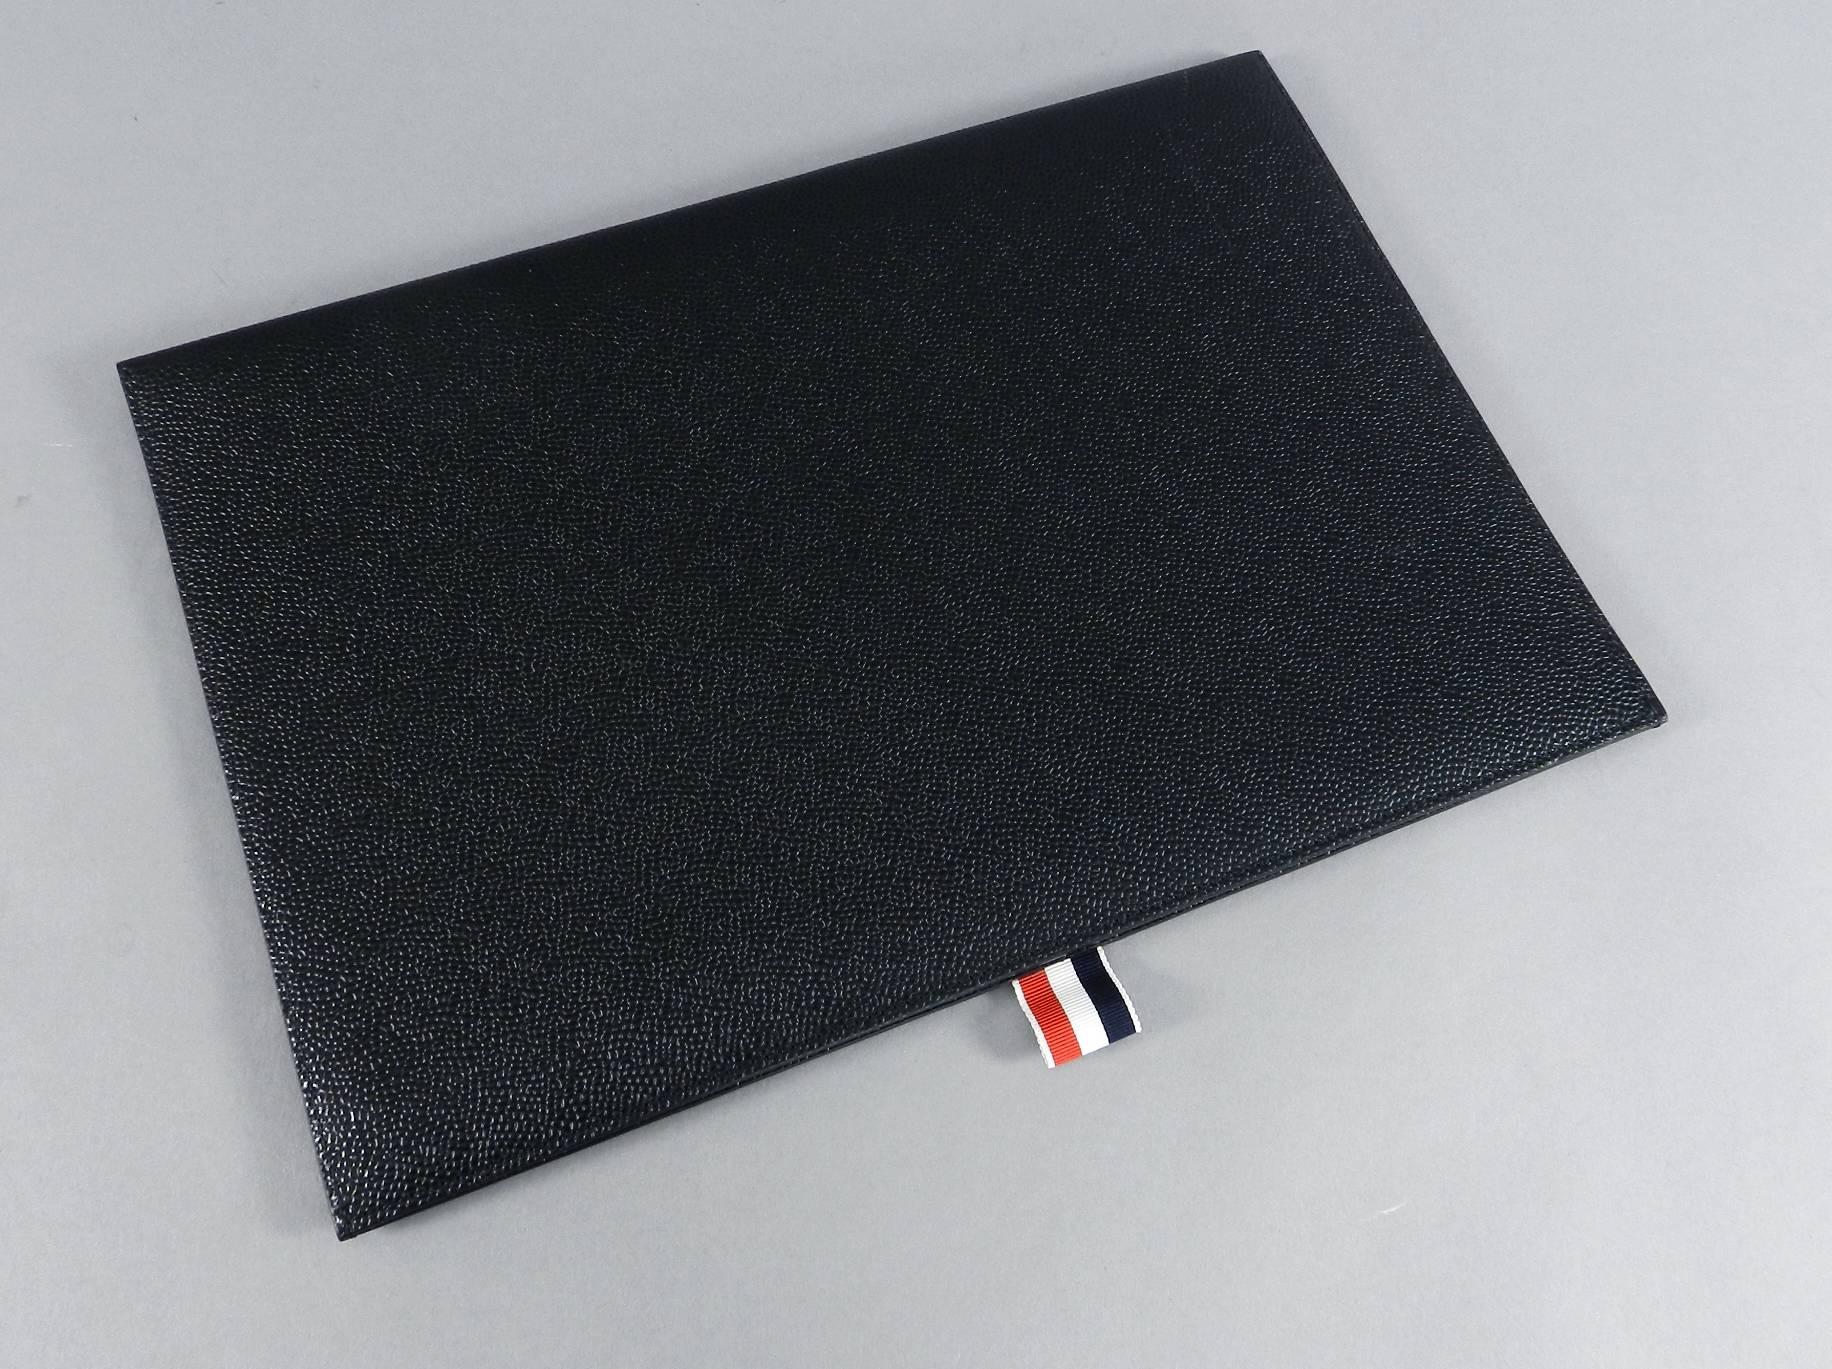 Thom Browne New York Black Leather Flat Portfolio / Clutch Bag 2